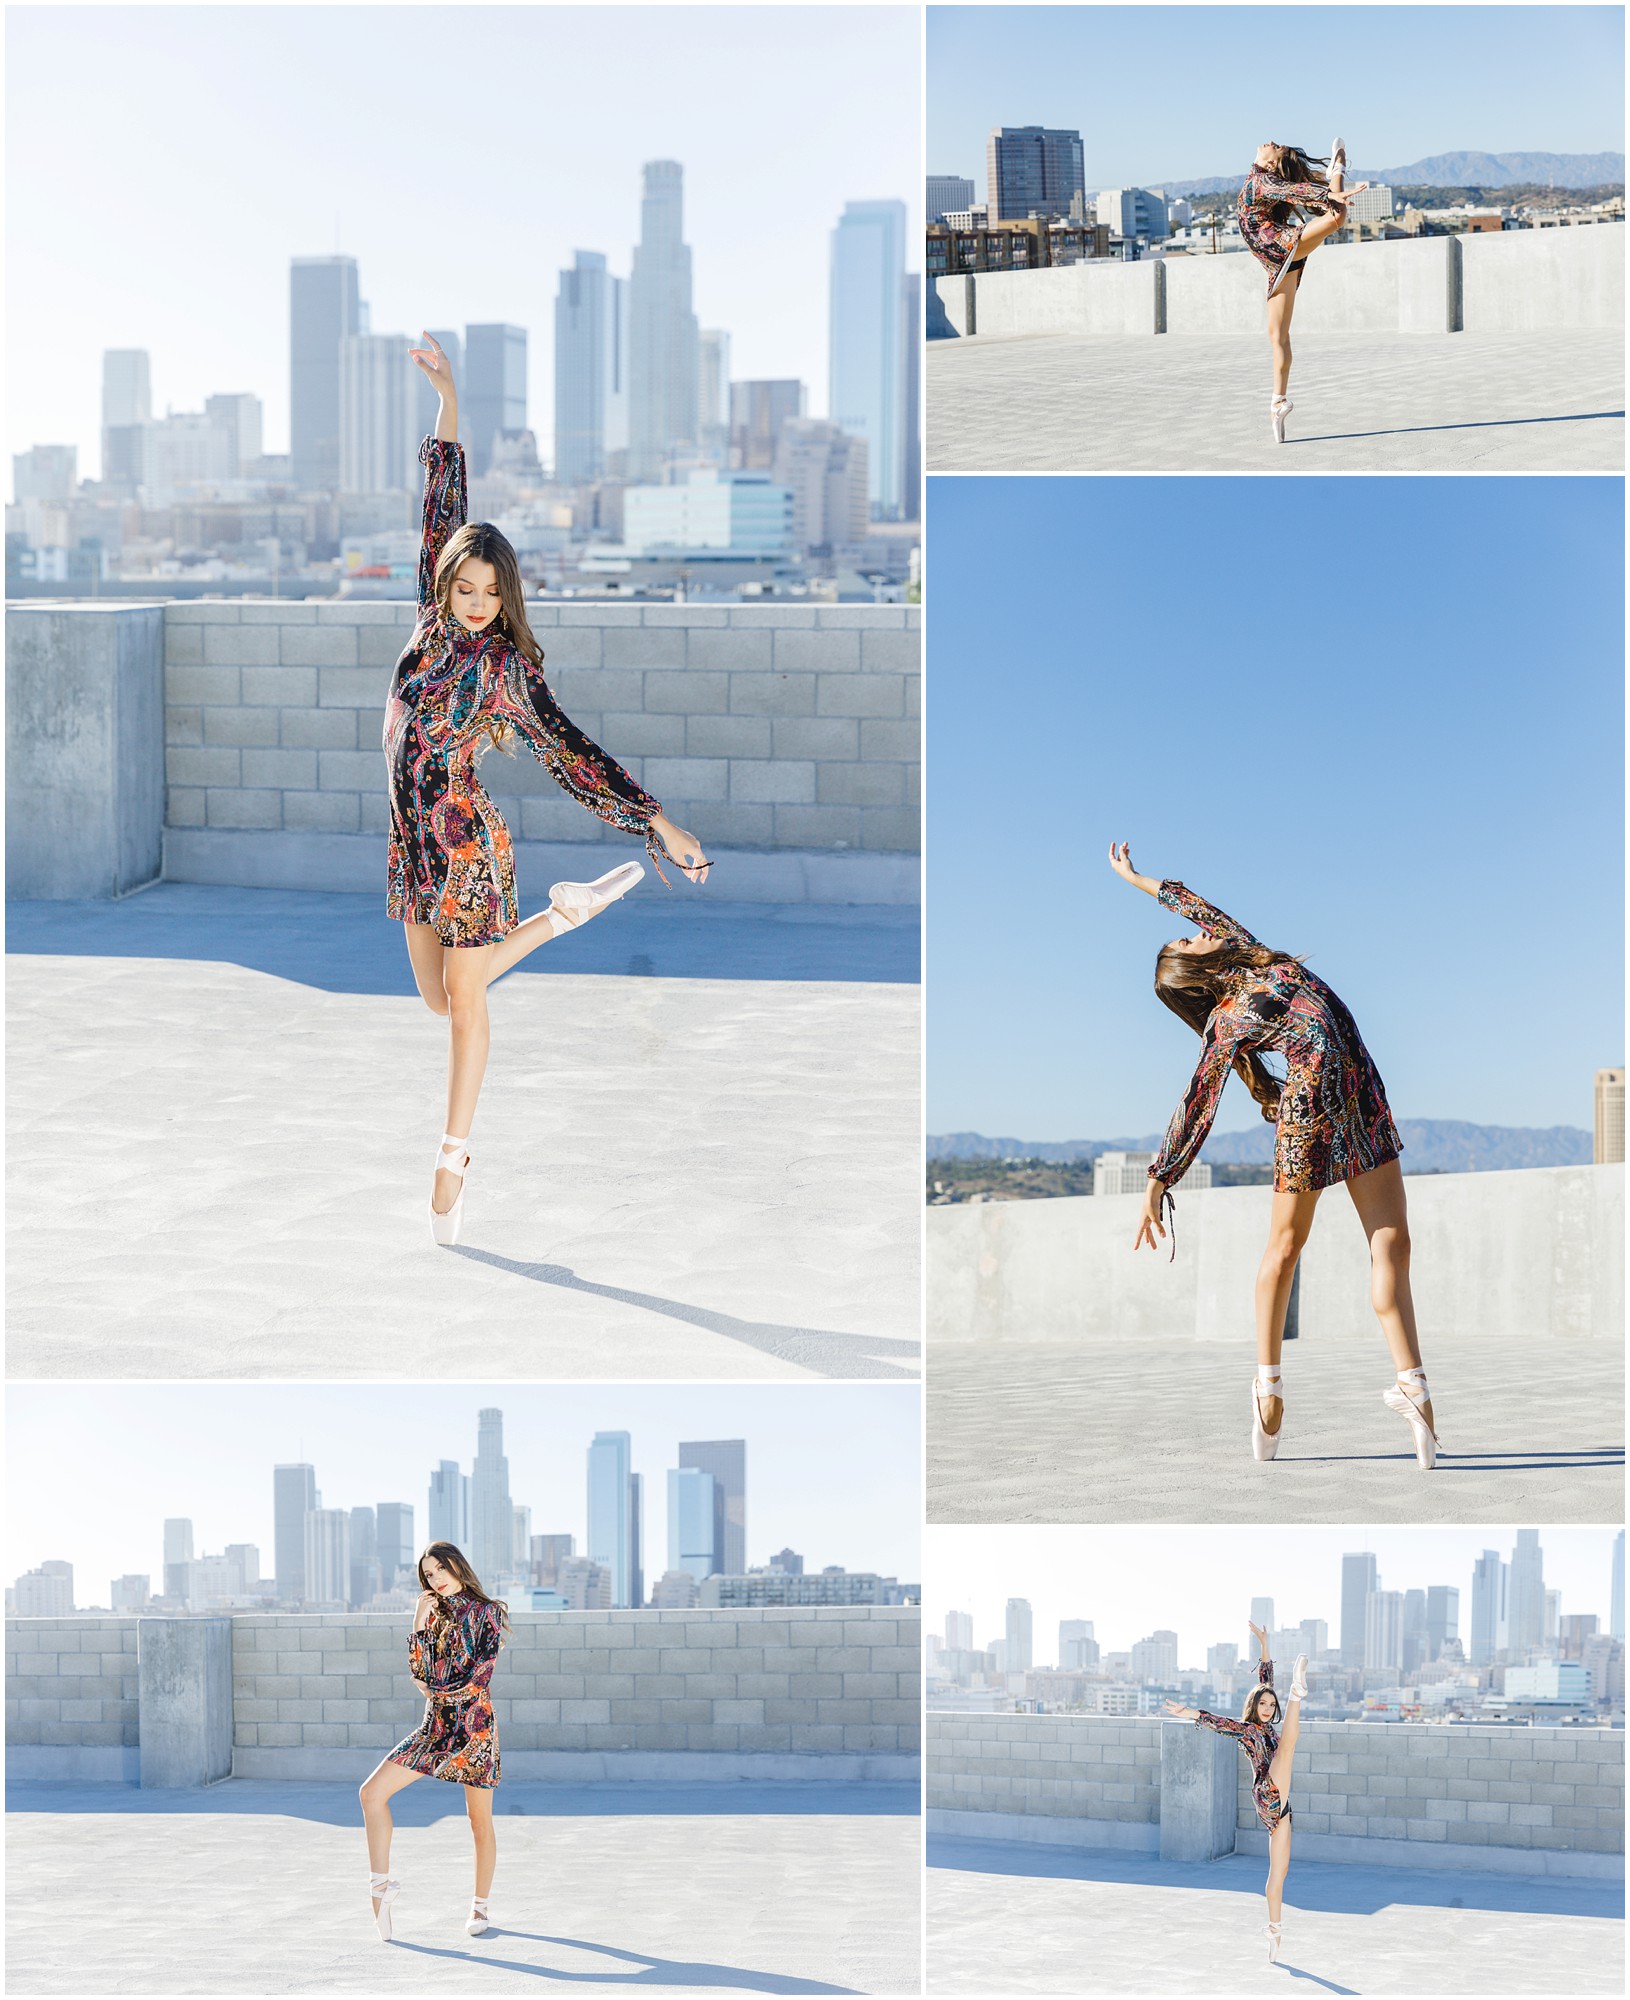 creative, dance senior pictures taken in Los Angeles, skyline, by senior photographer Tara Rochelle